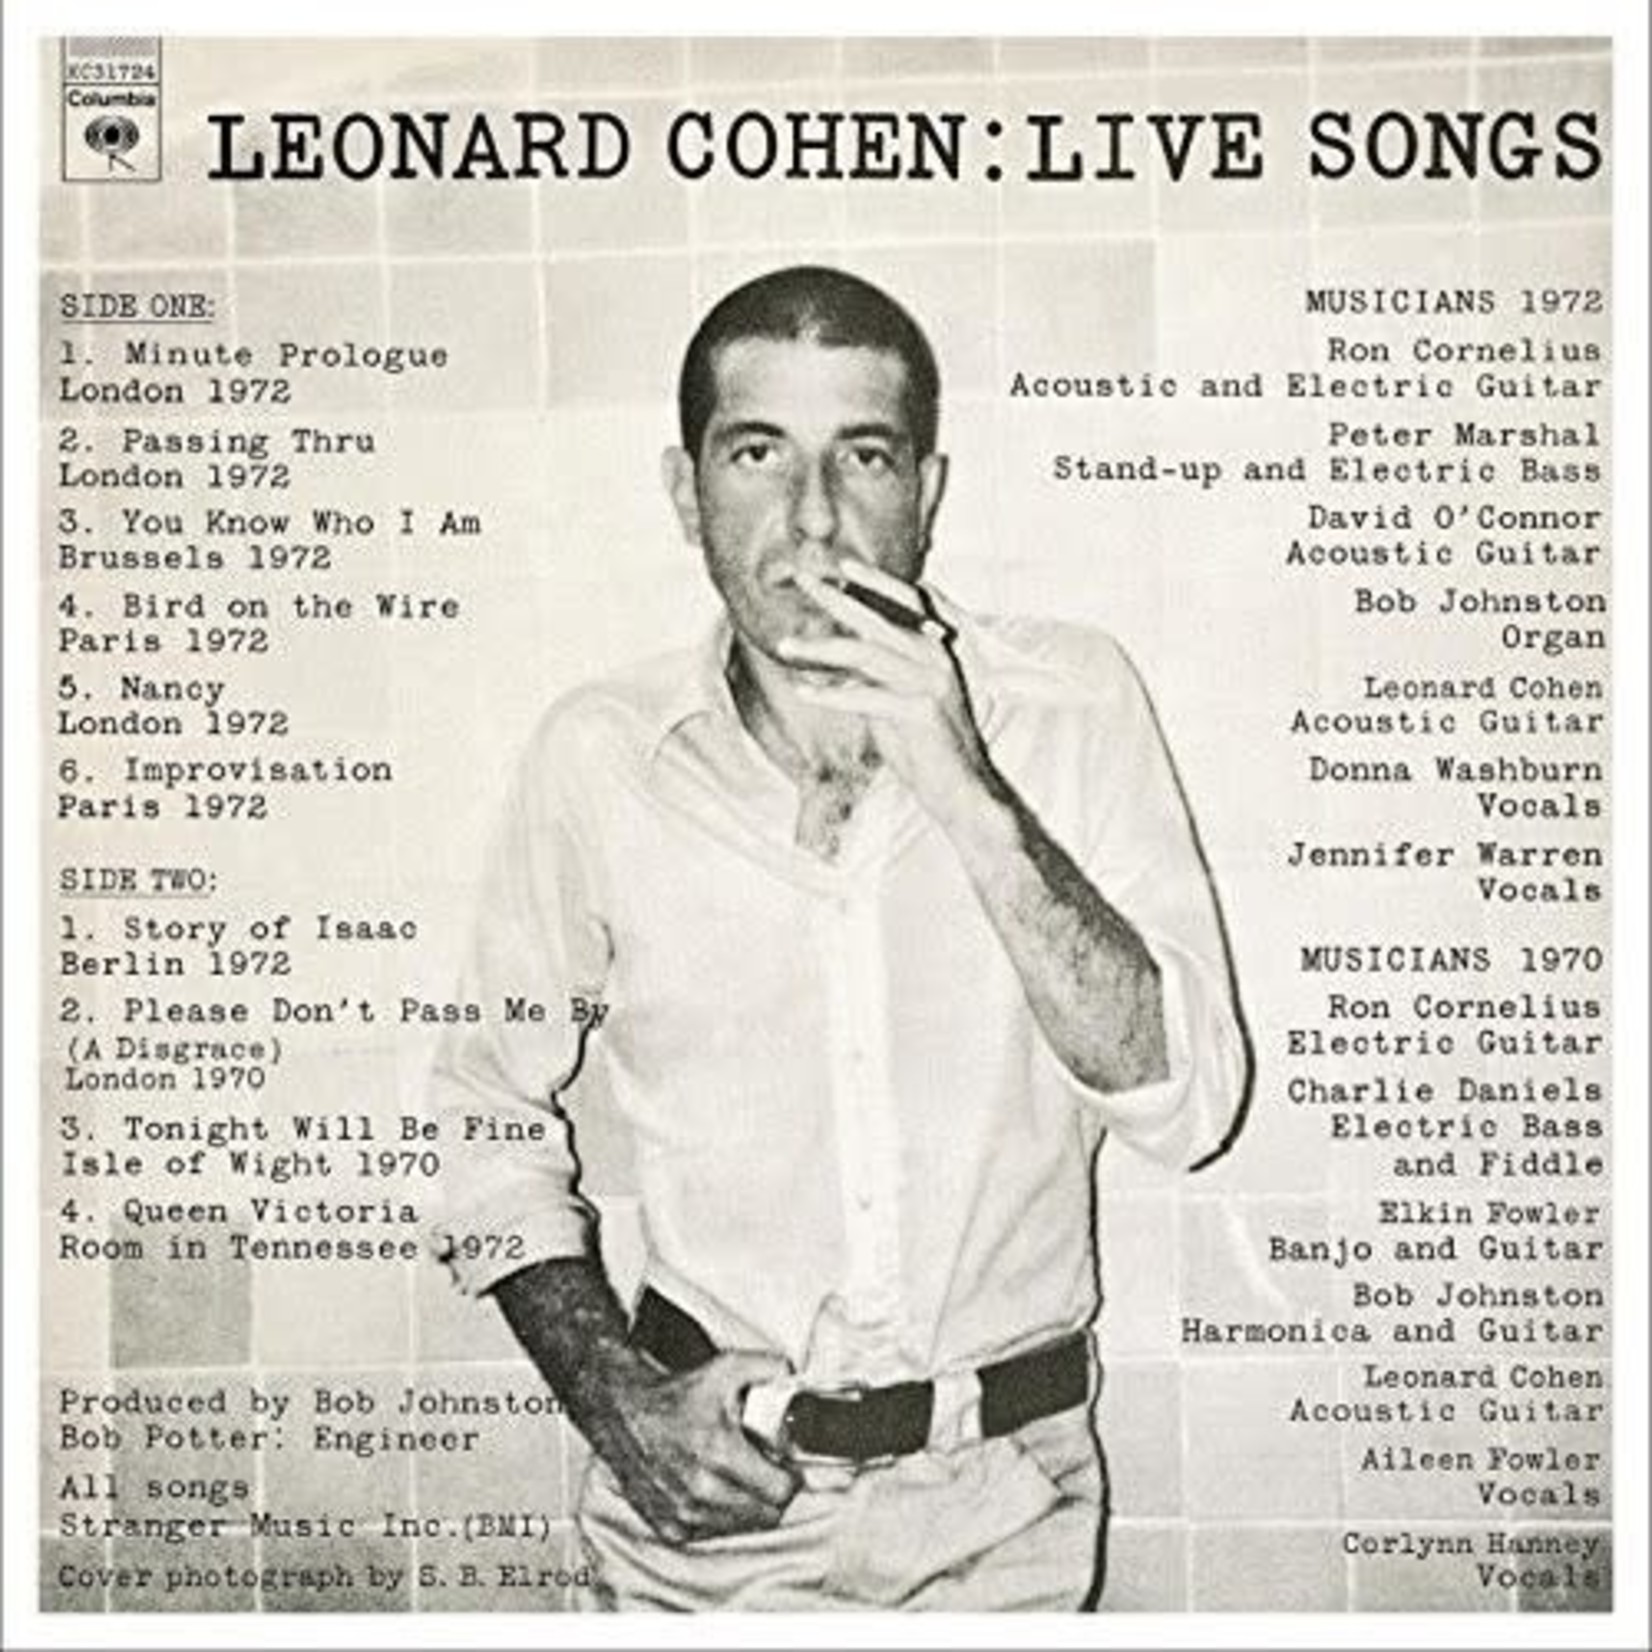 Sony Leonard Cohen - Live Songs (LP) [180gm]